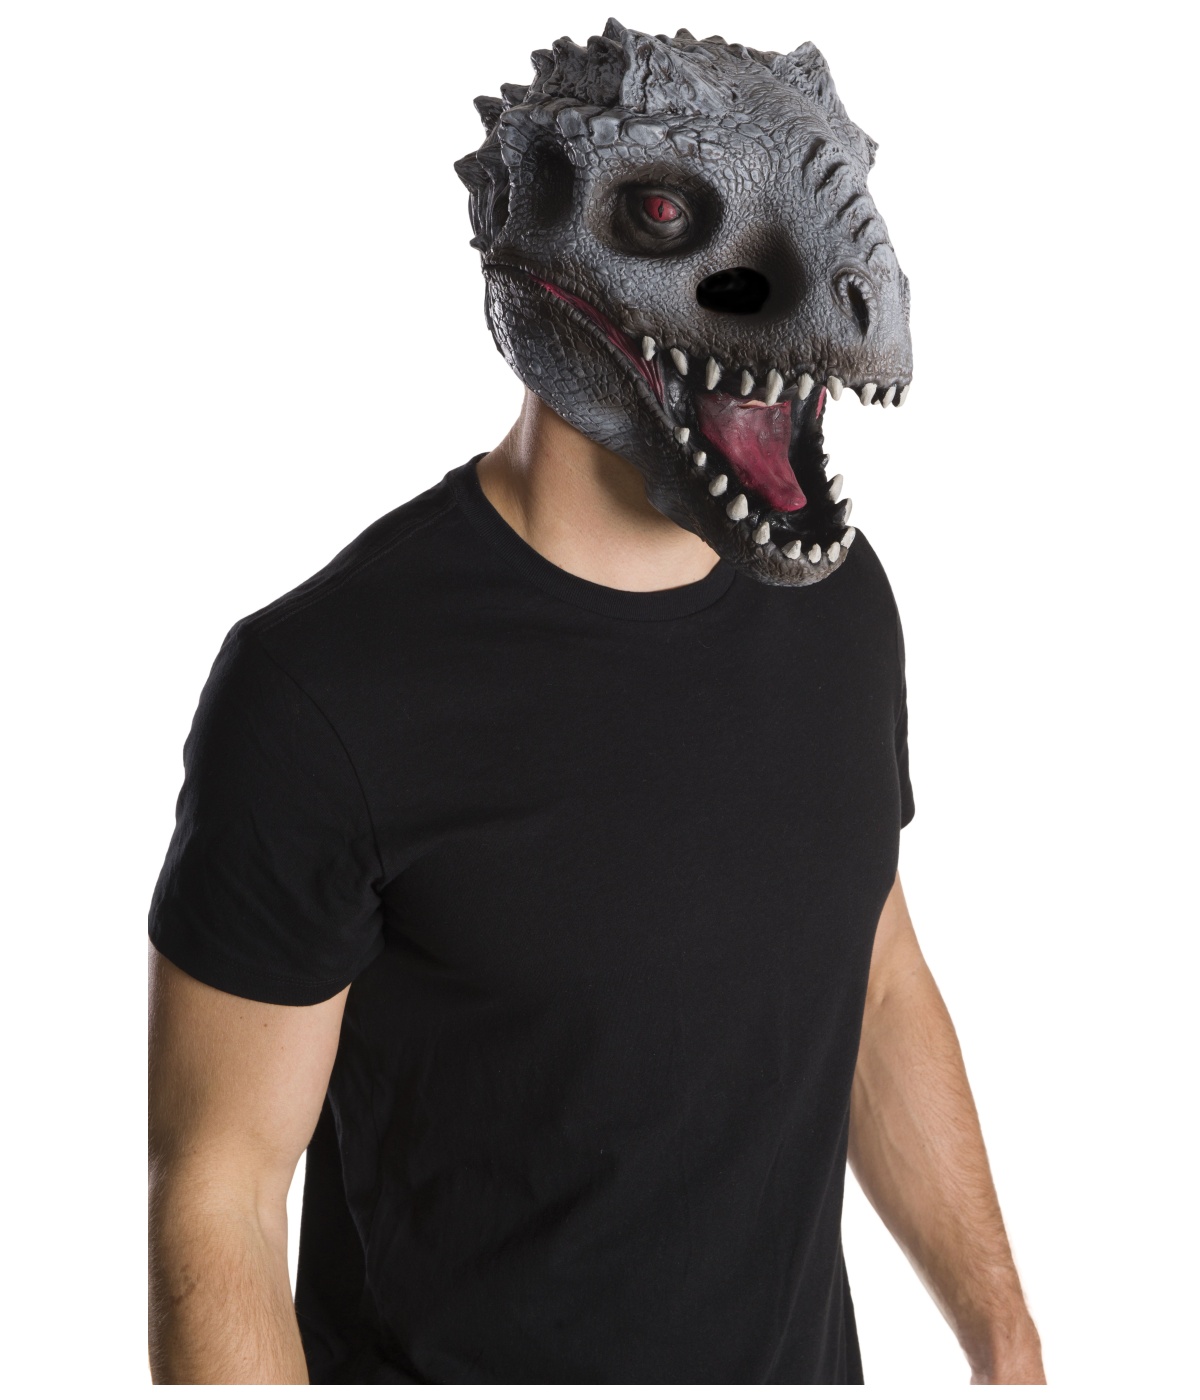  Jurassic World Dino Mask